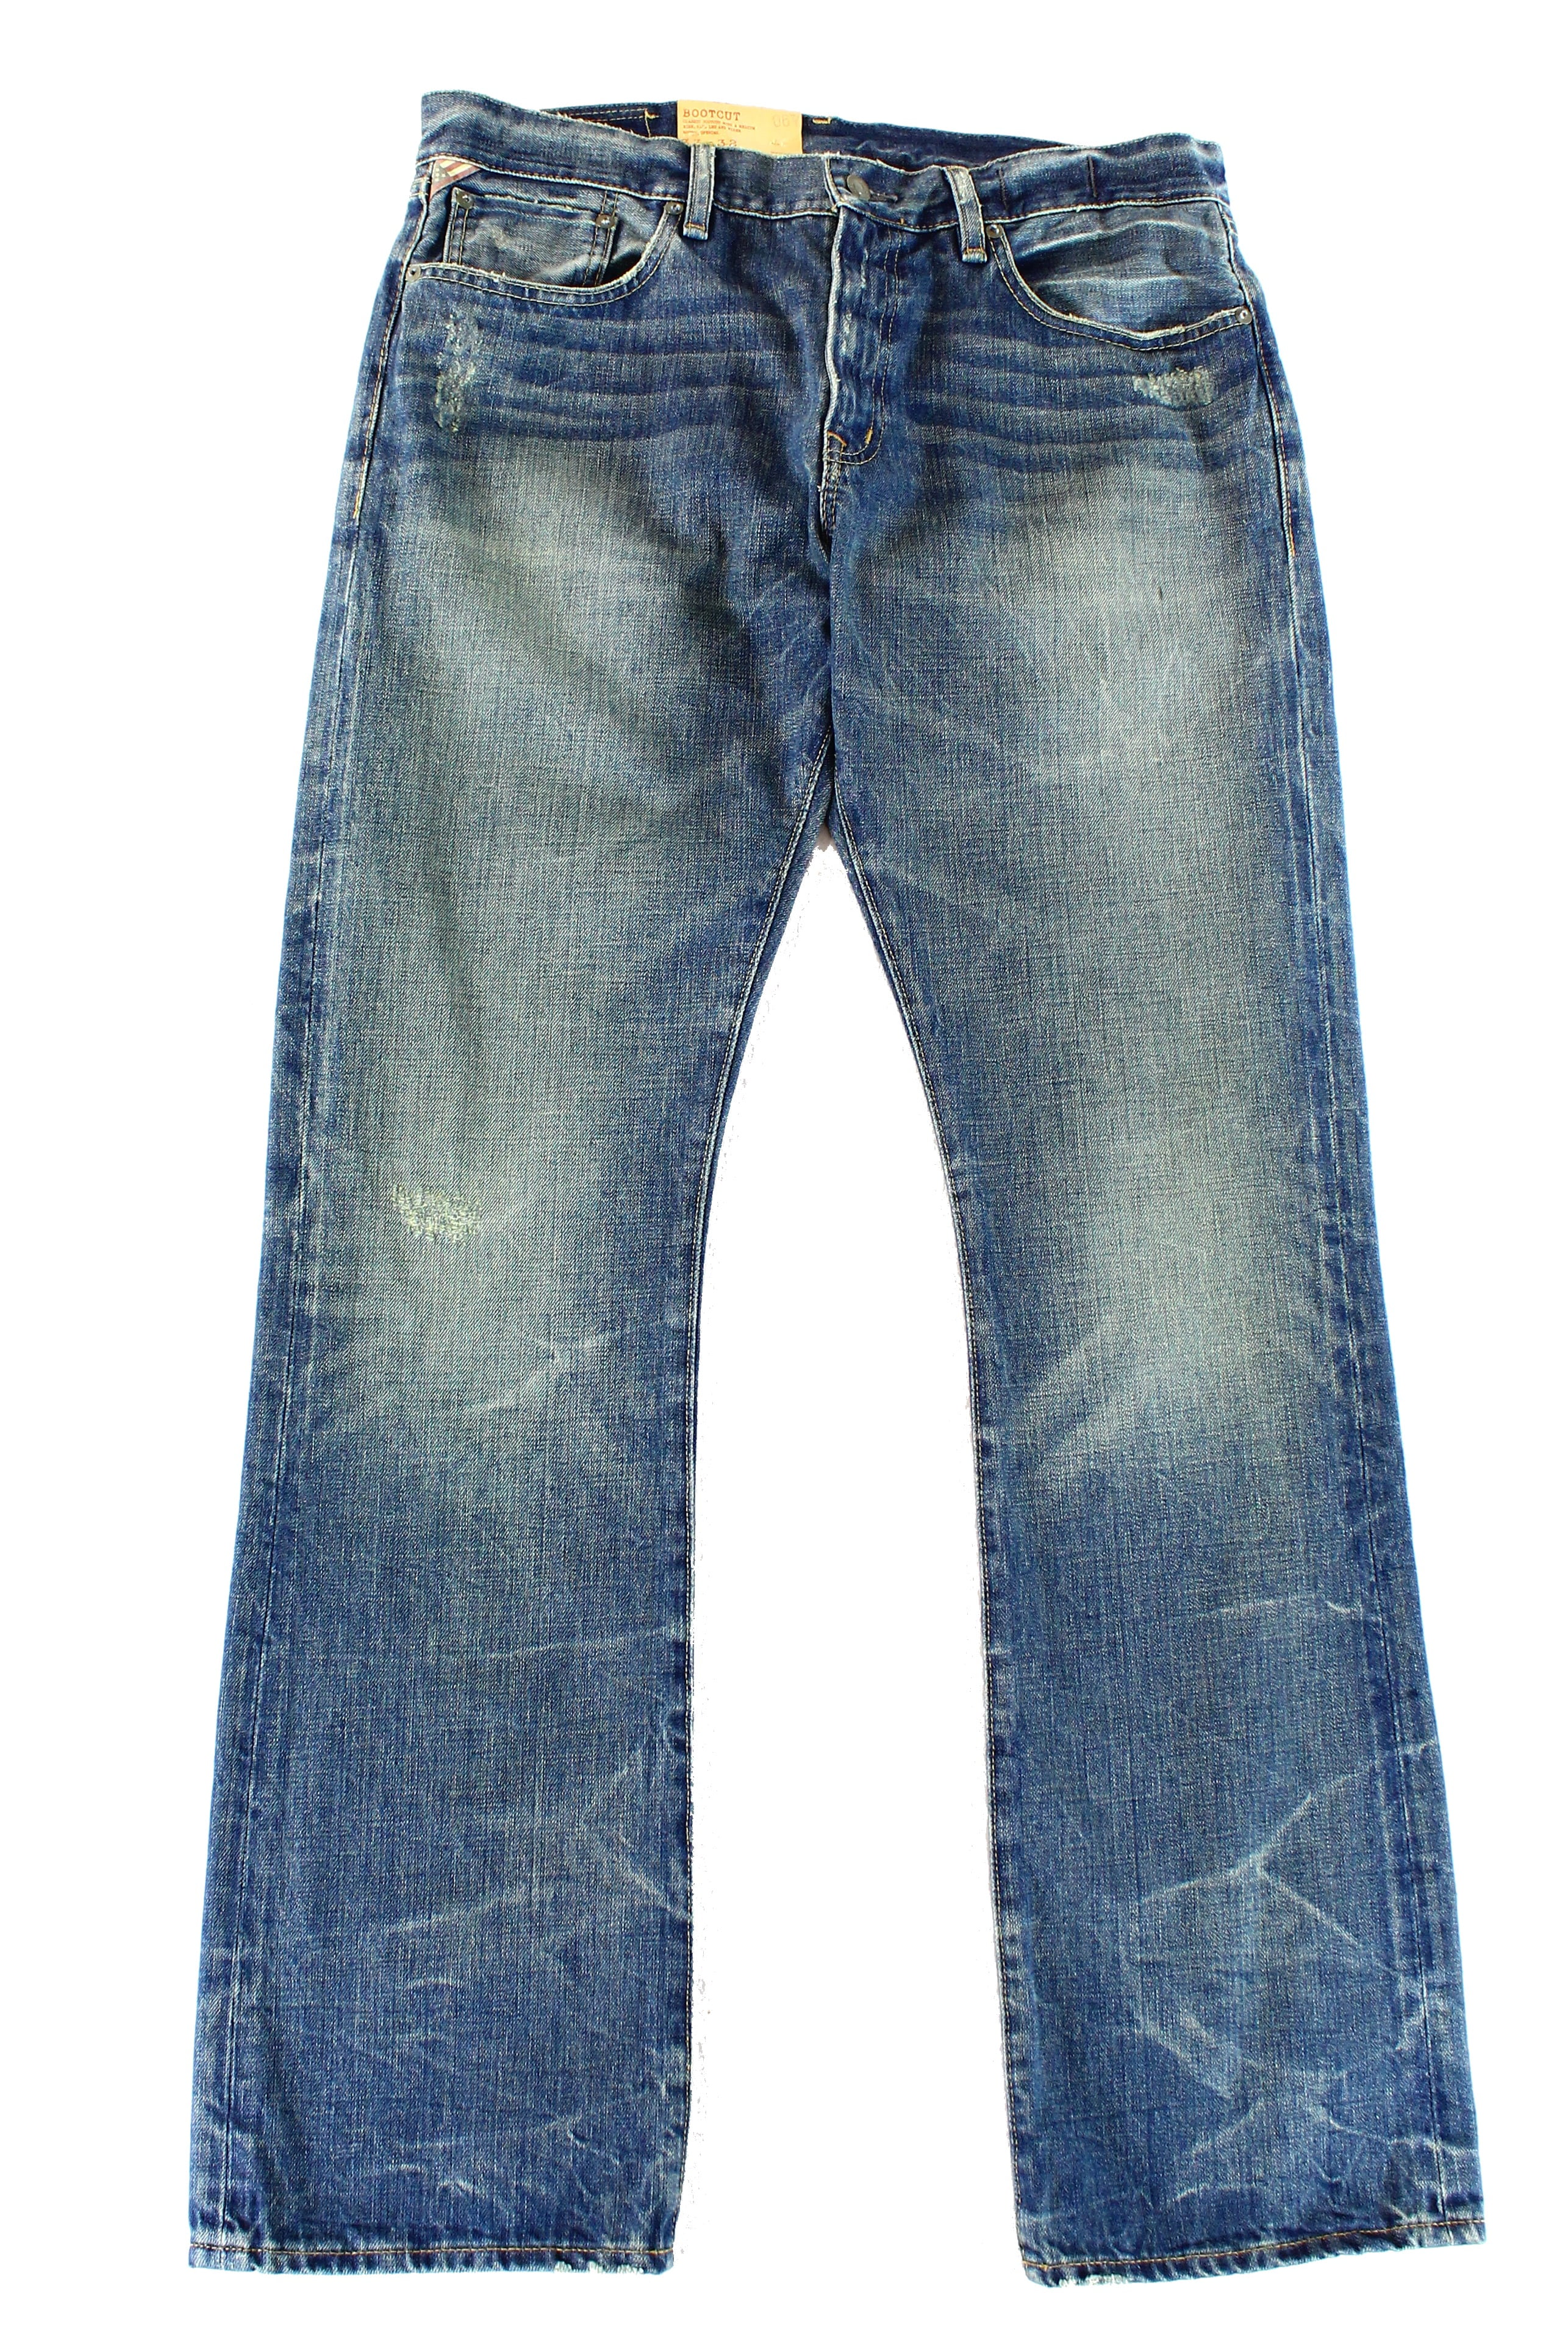 ralph lauren denim and supply mens bootcut jeans